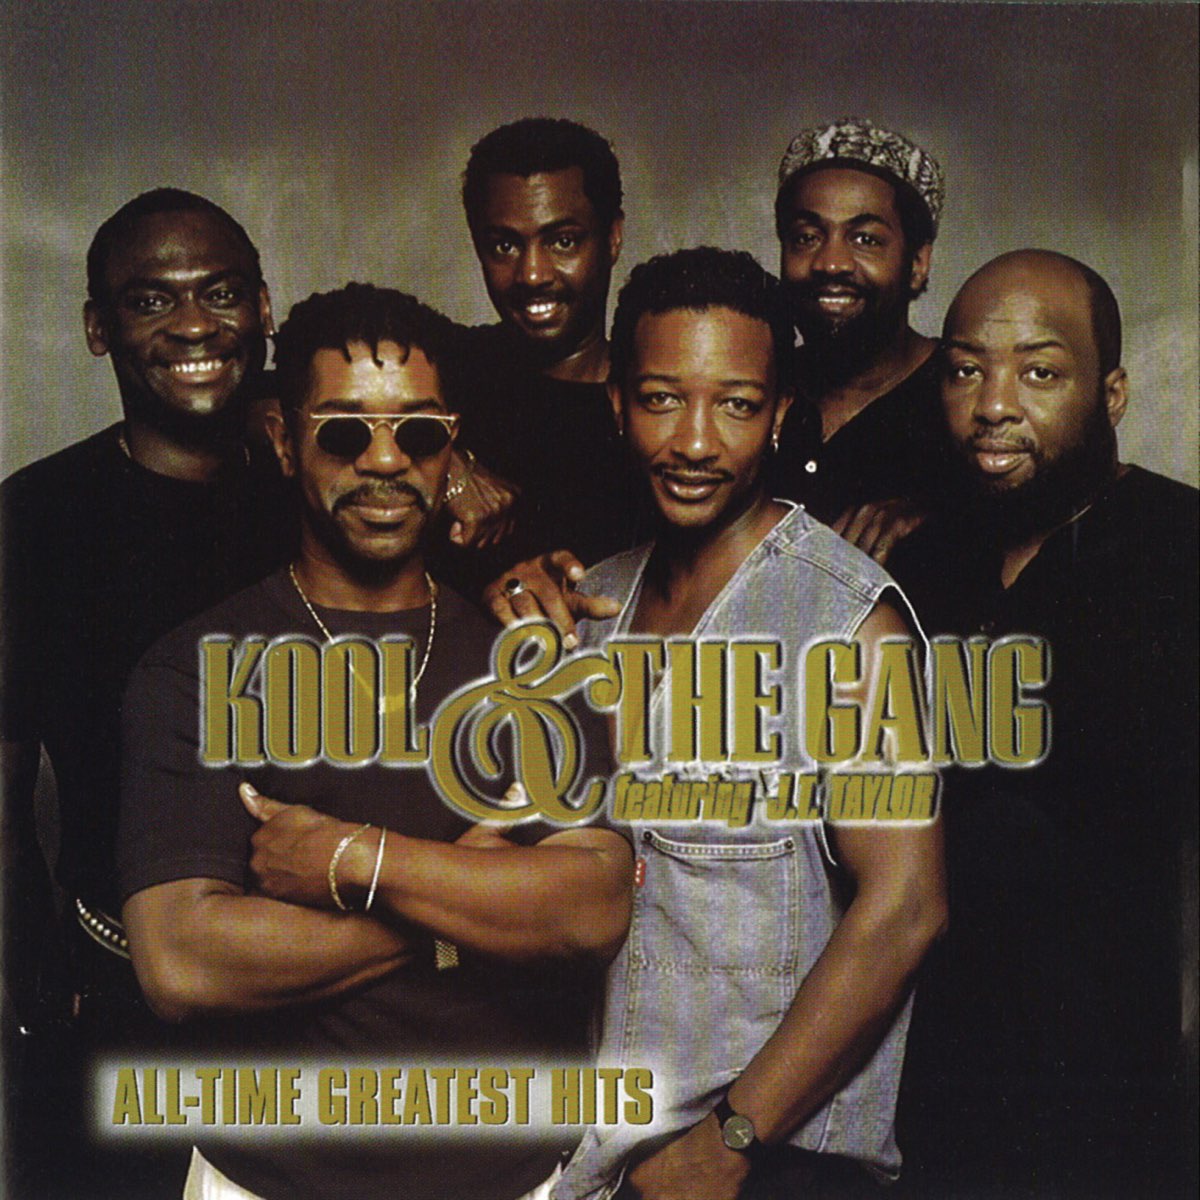 Bibi yang gang перевод. Группа Kool & the gang. Kool and the gang обложки. Kool & the gang - Greatest Hits. Kool & the gang - celebrate!.